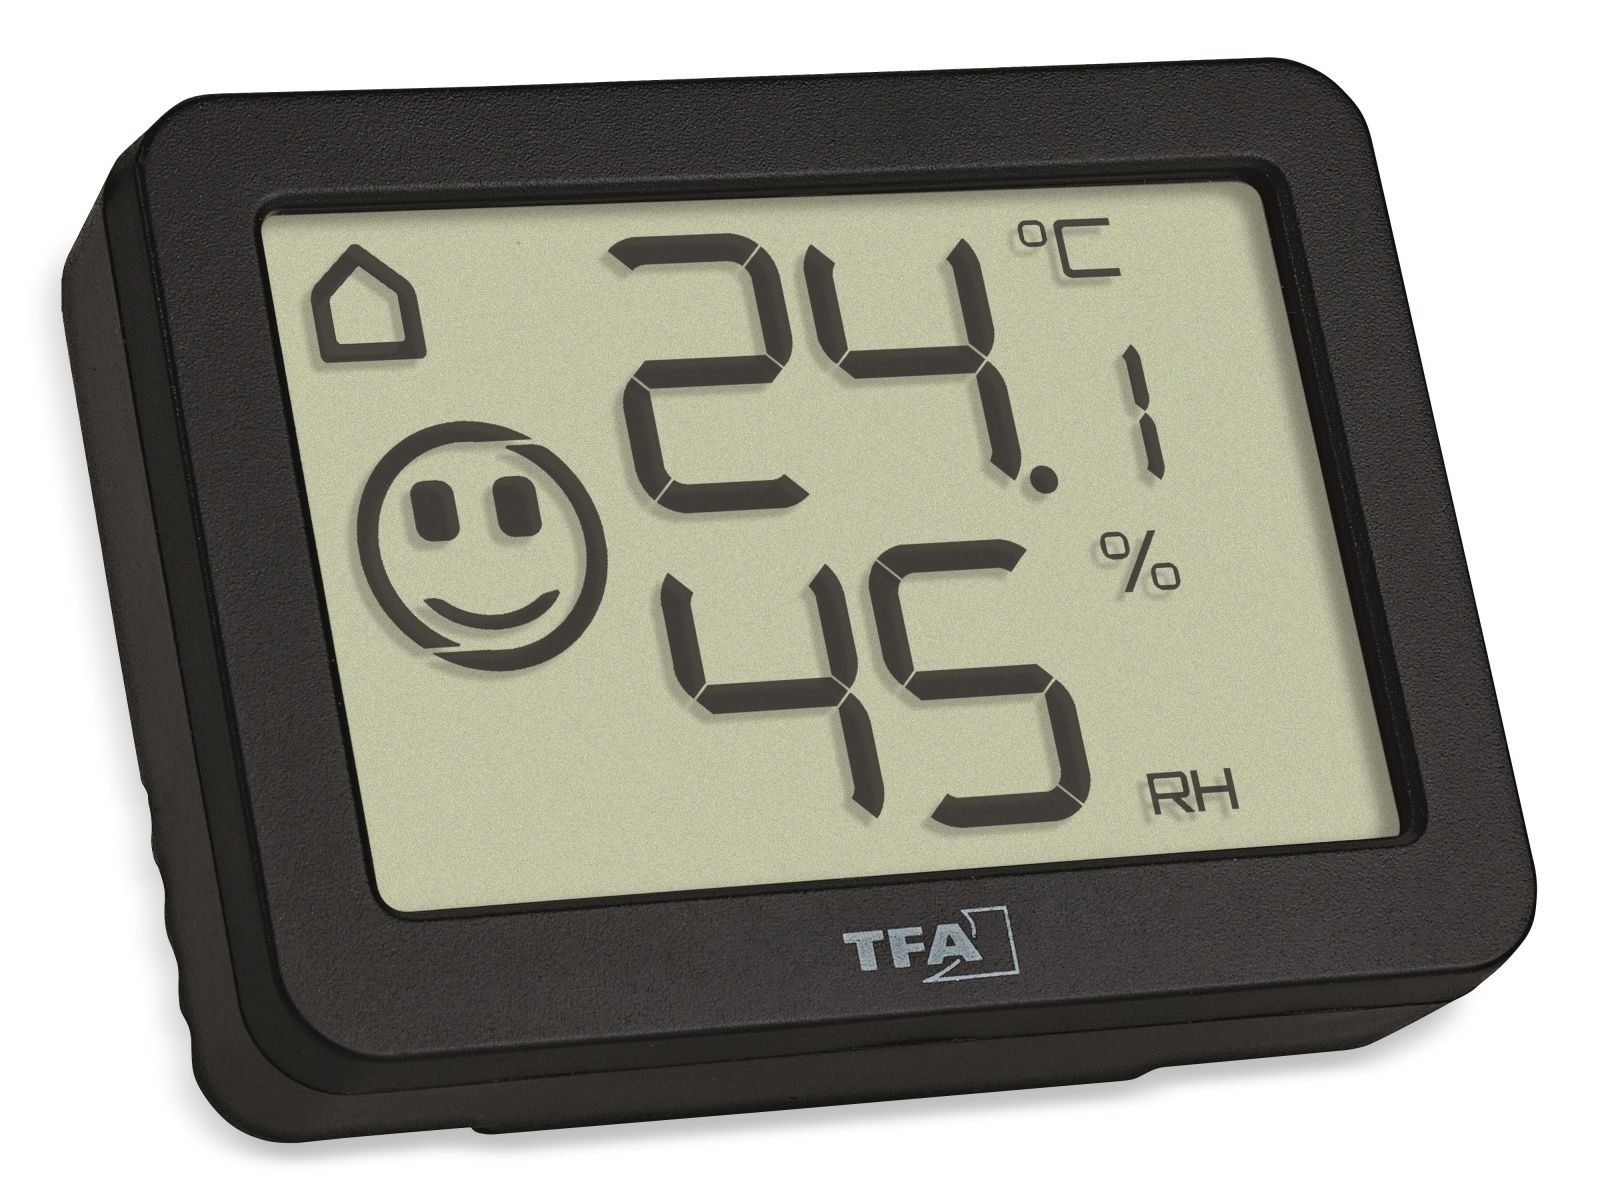 TFA Digitales Thermo-Hygrometer 30.5055.01, schwarz von TFA